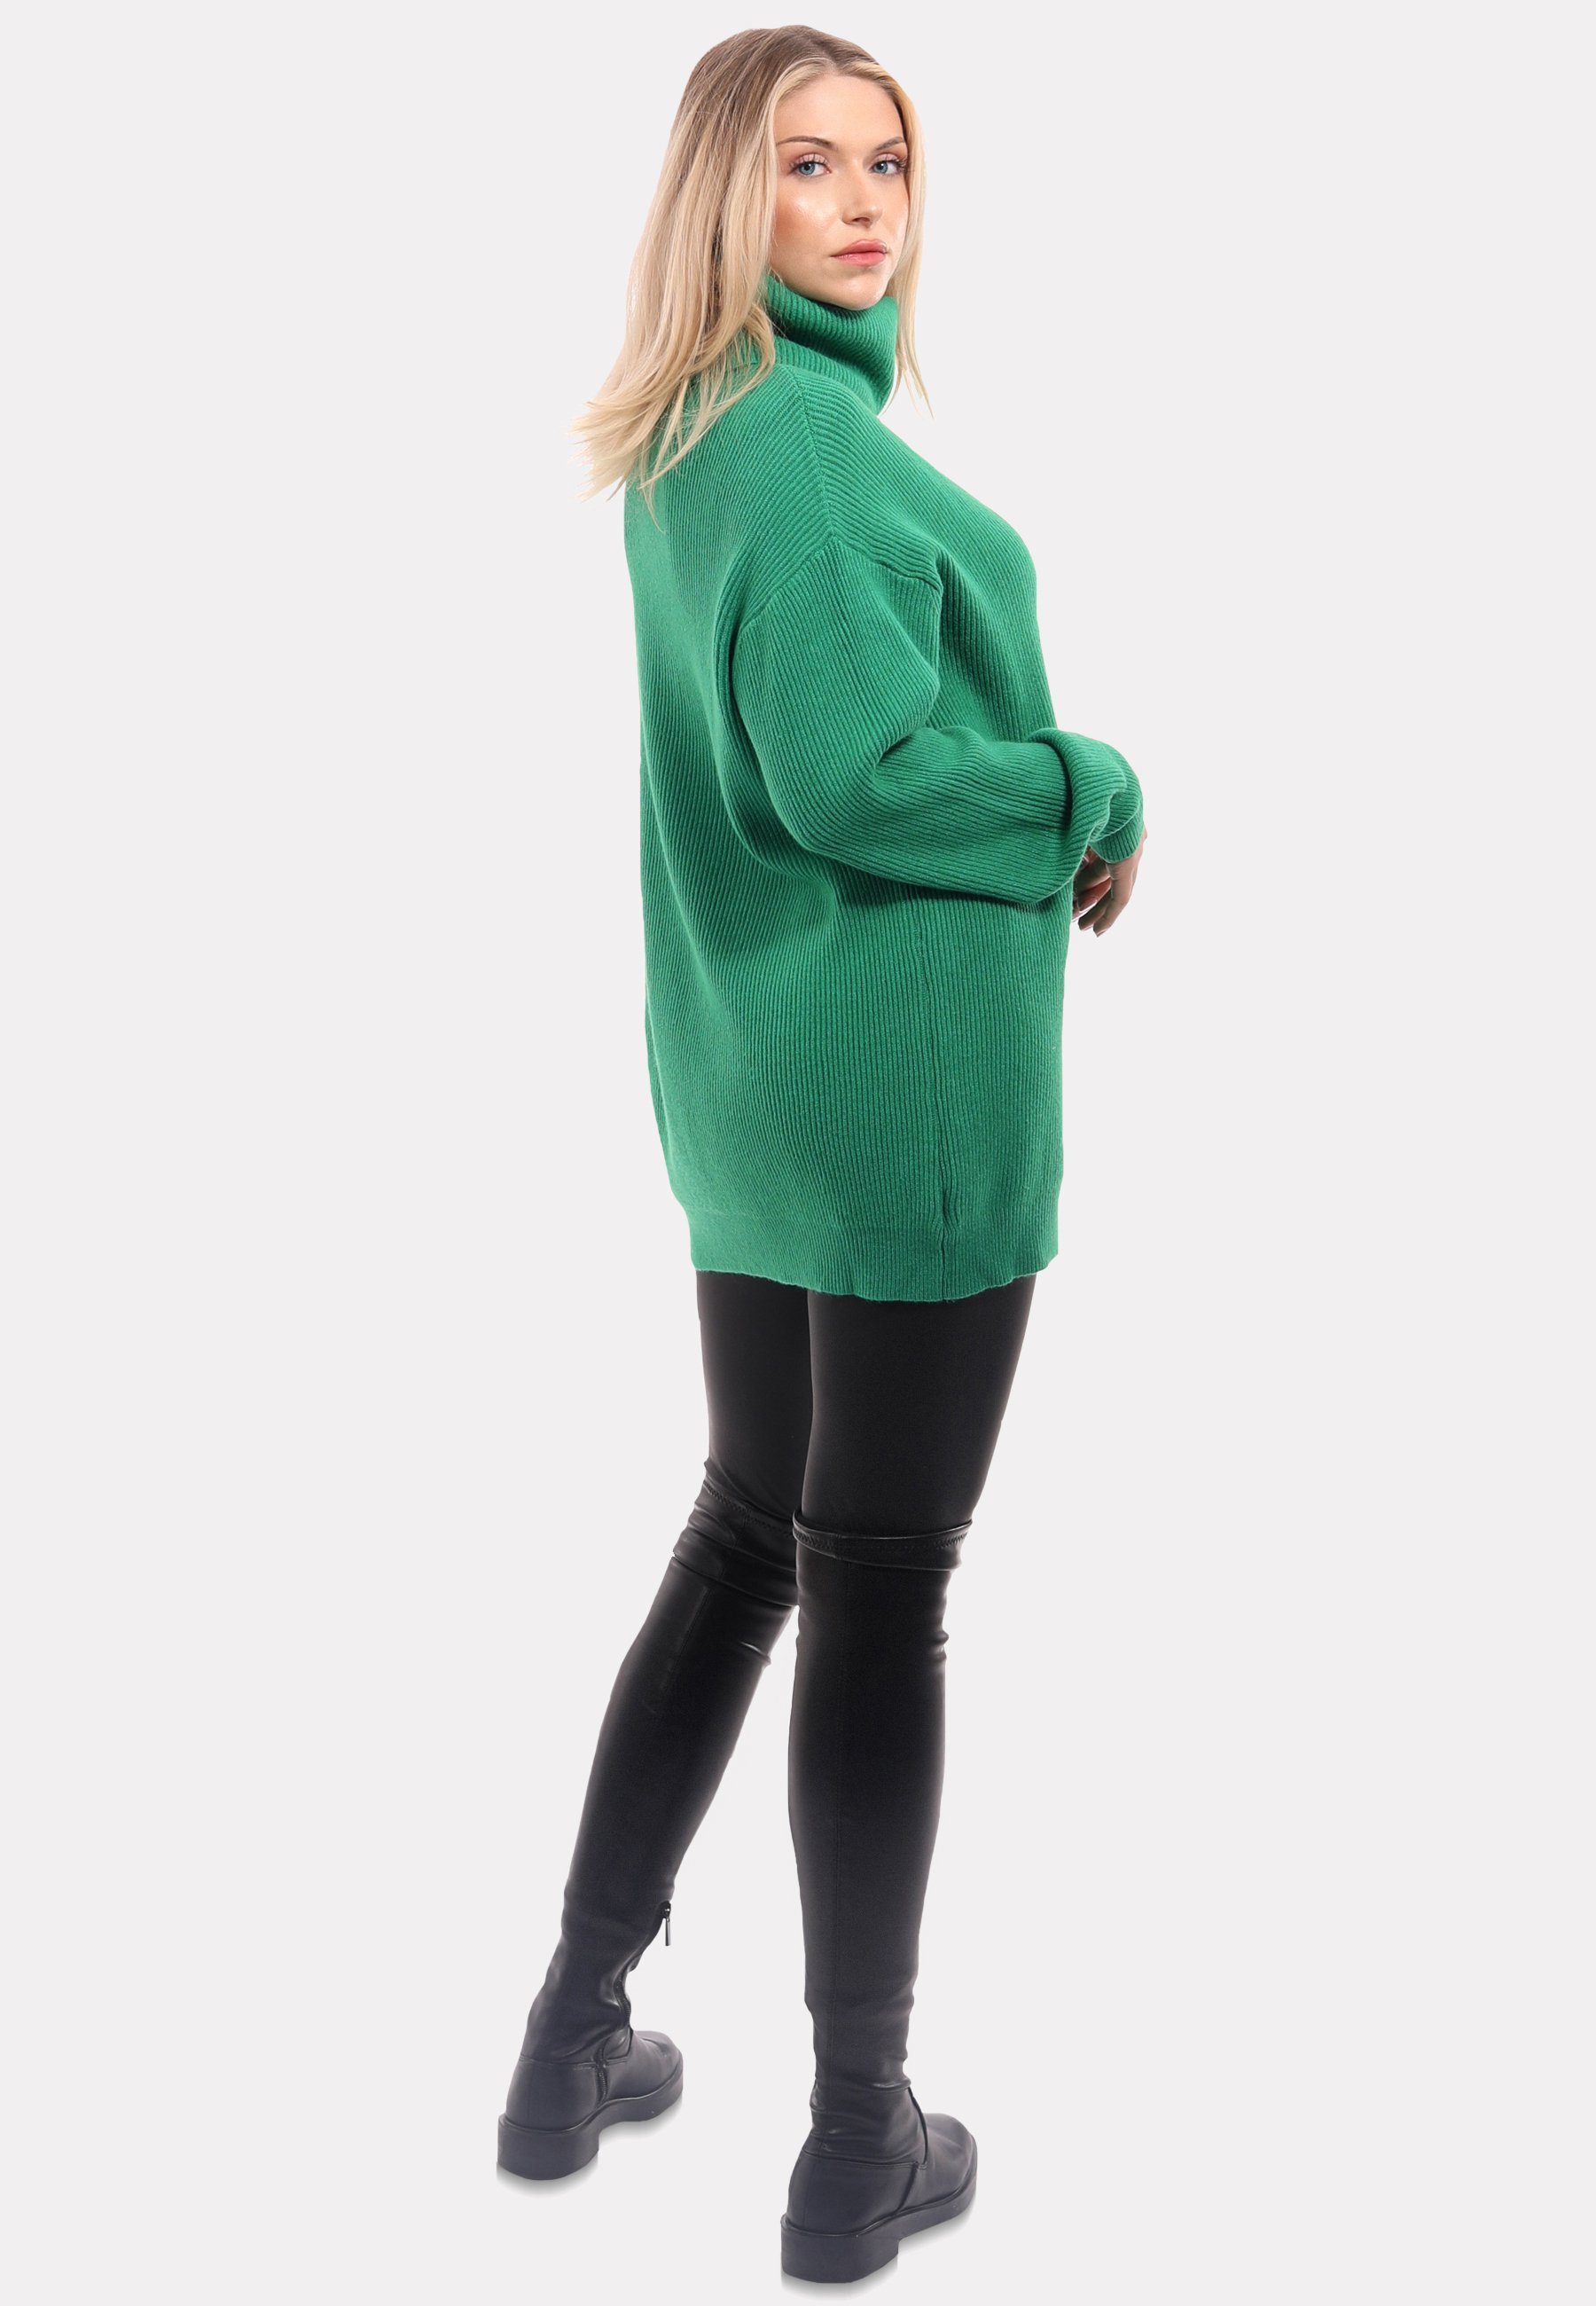 YC Fashion & " in Rollkragenpullover grün Turtleneck Unifarbe Style Sweater (1-tlg) "Chic